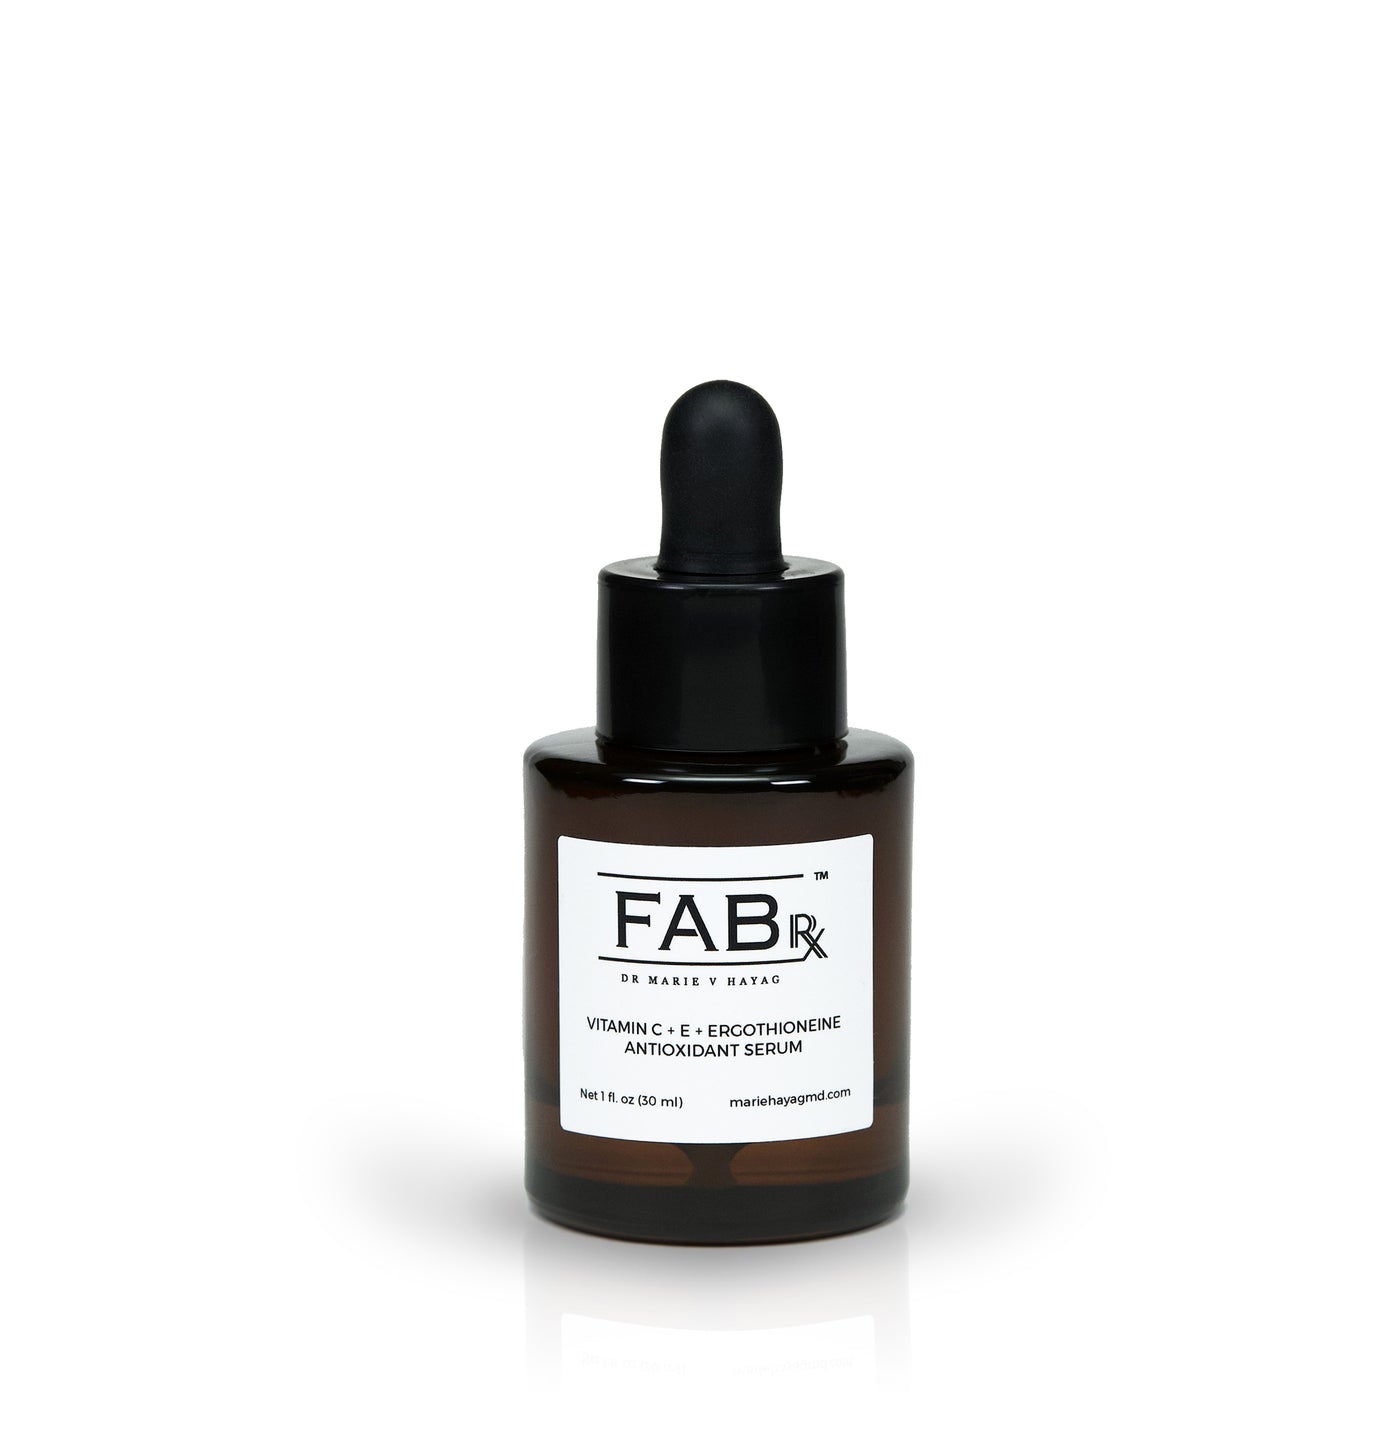 FABrx Vitamin C + Ergothioneine Antioxidant Serum